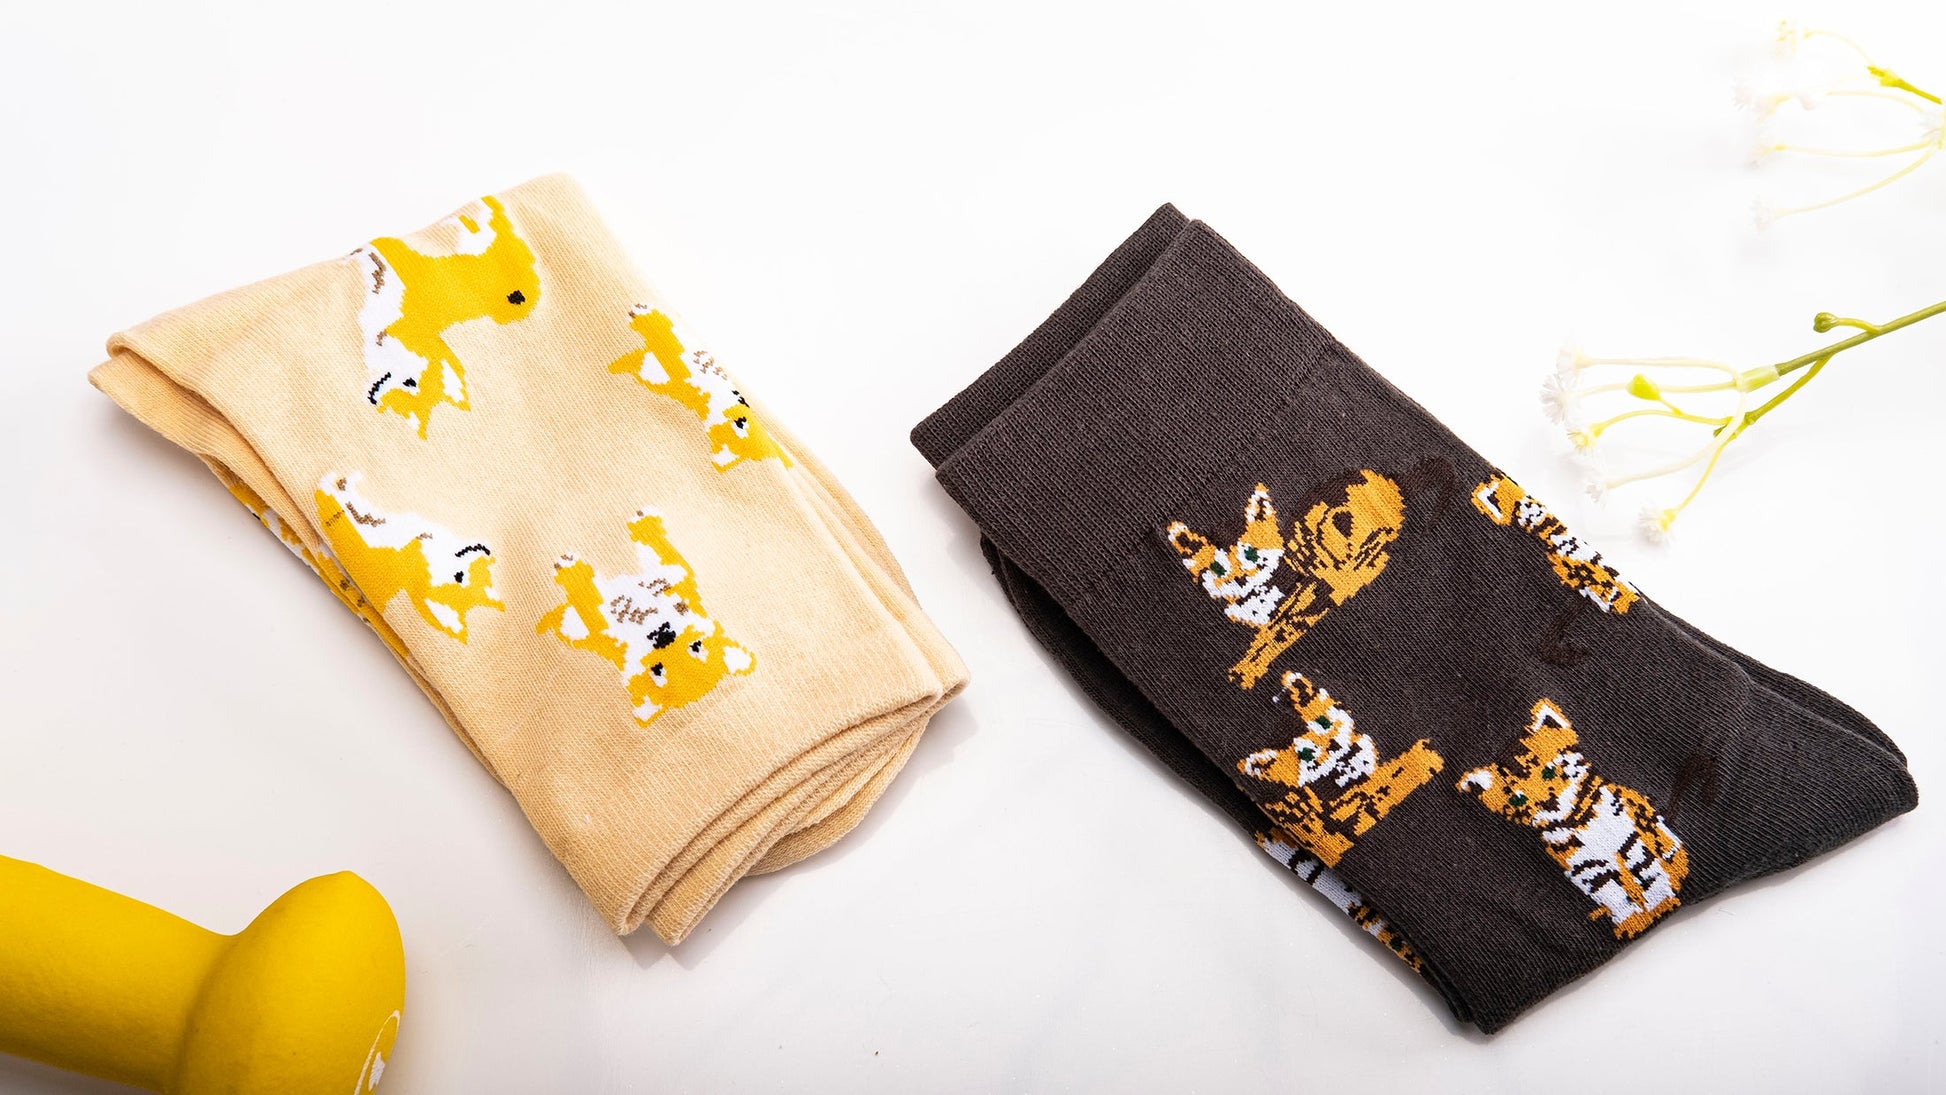 Japan style flower dog orange cat cotton socks - starcopia design store